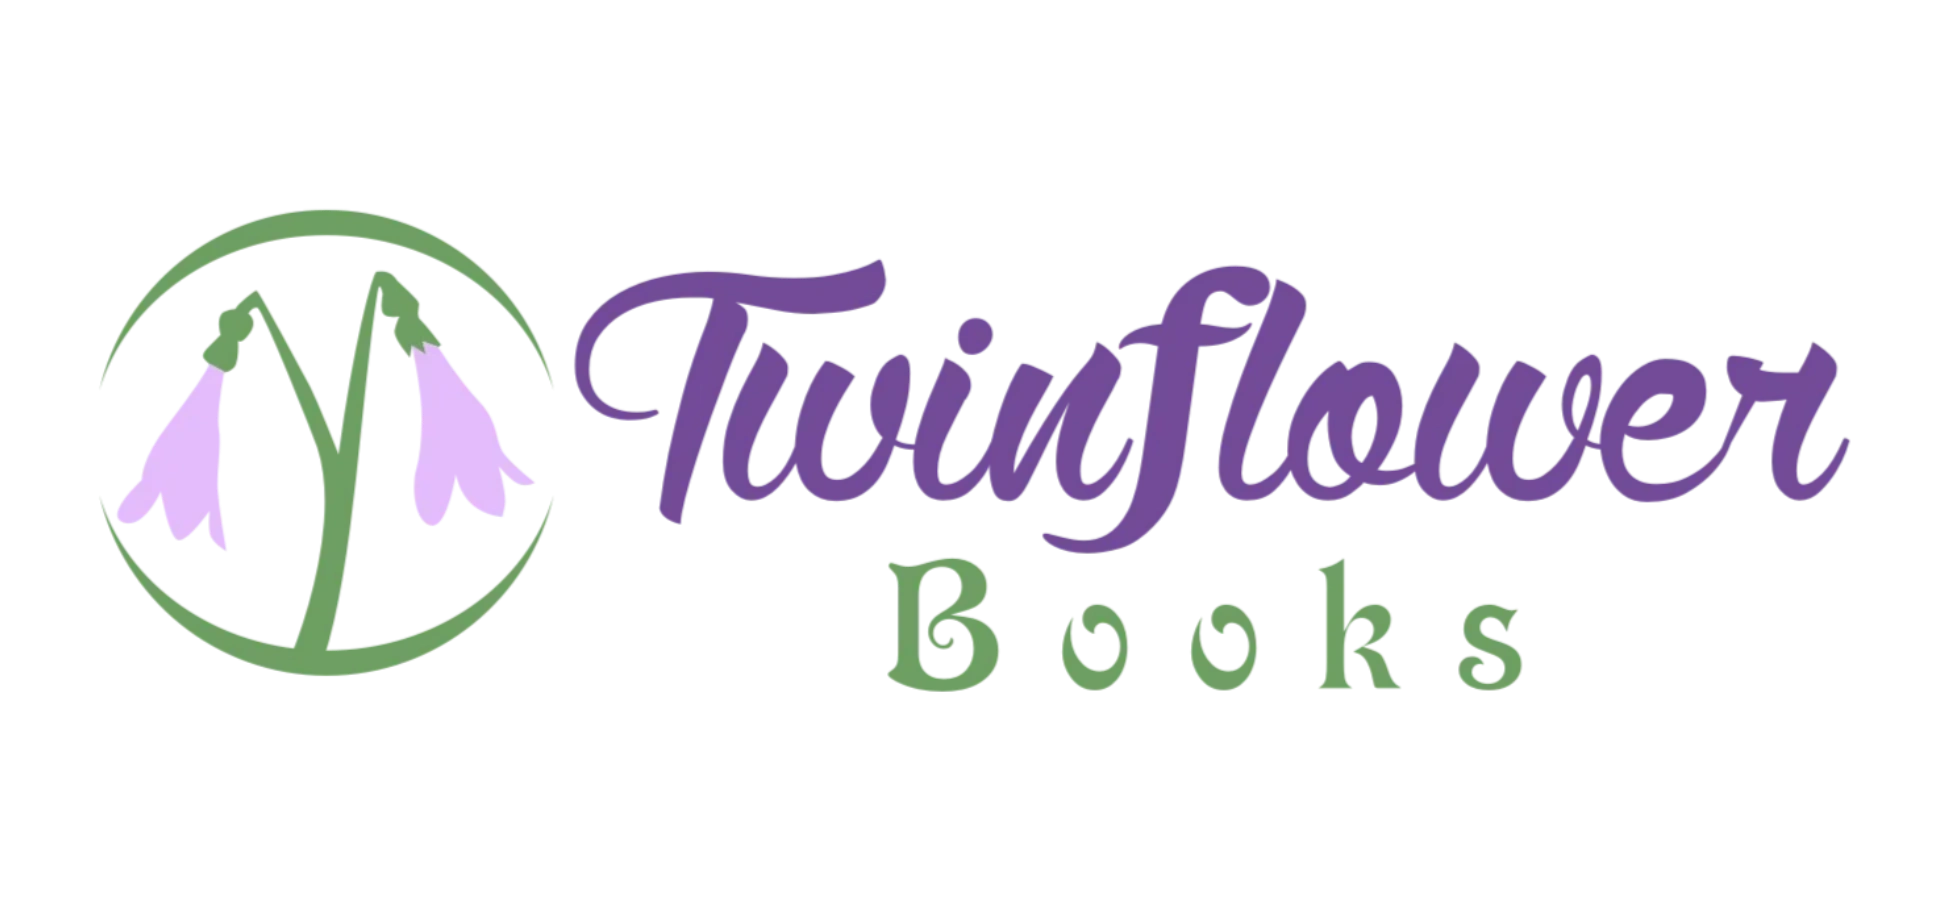 Twinflower Books